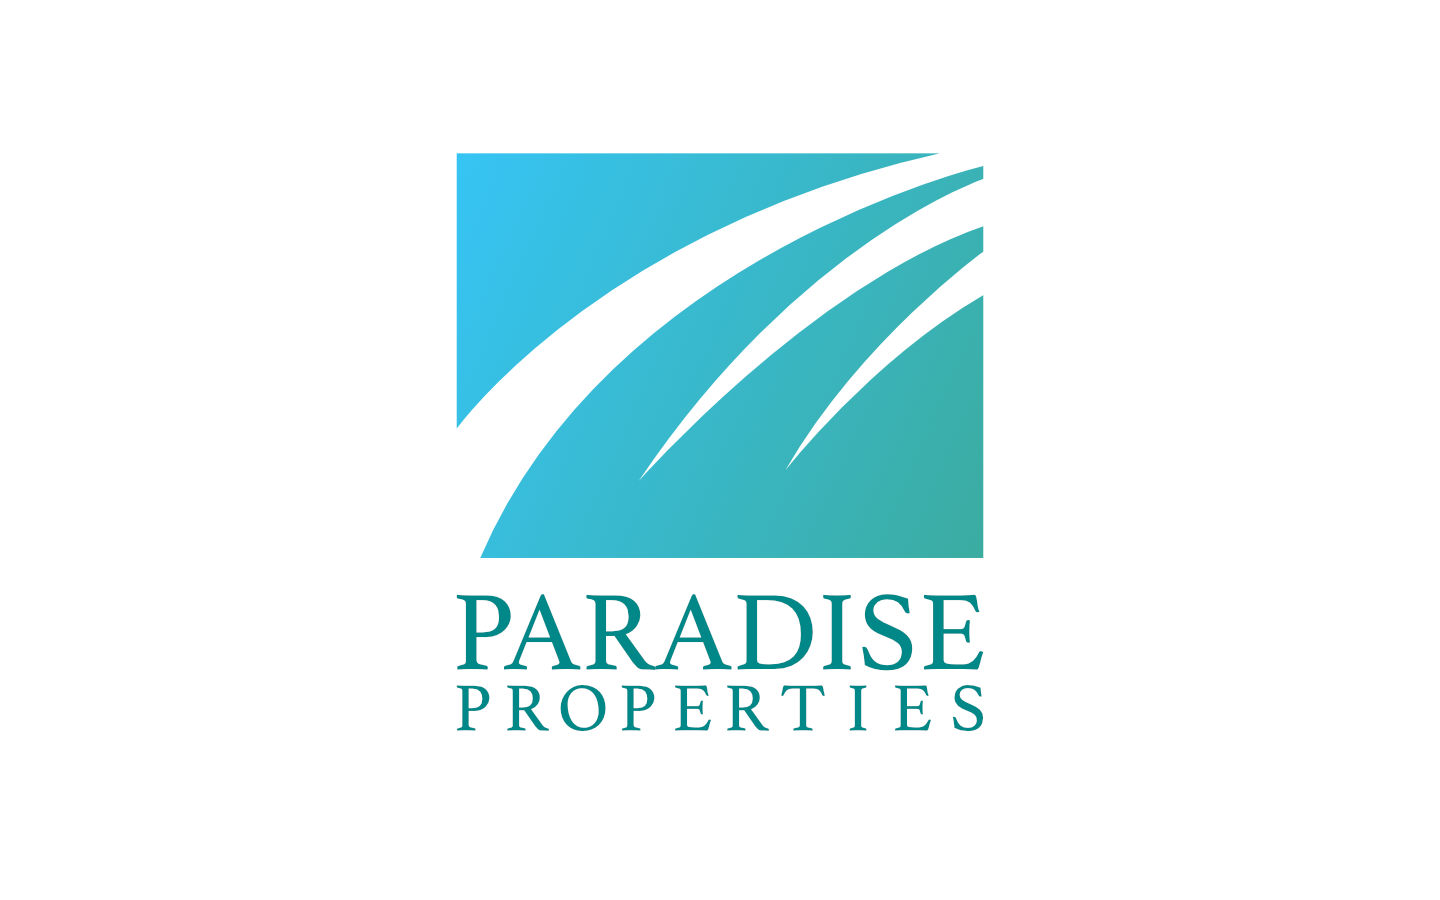 Paradise Properties logo clean up